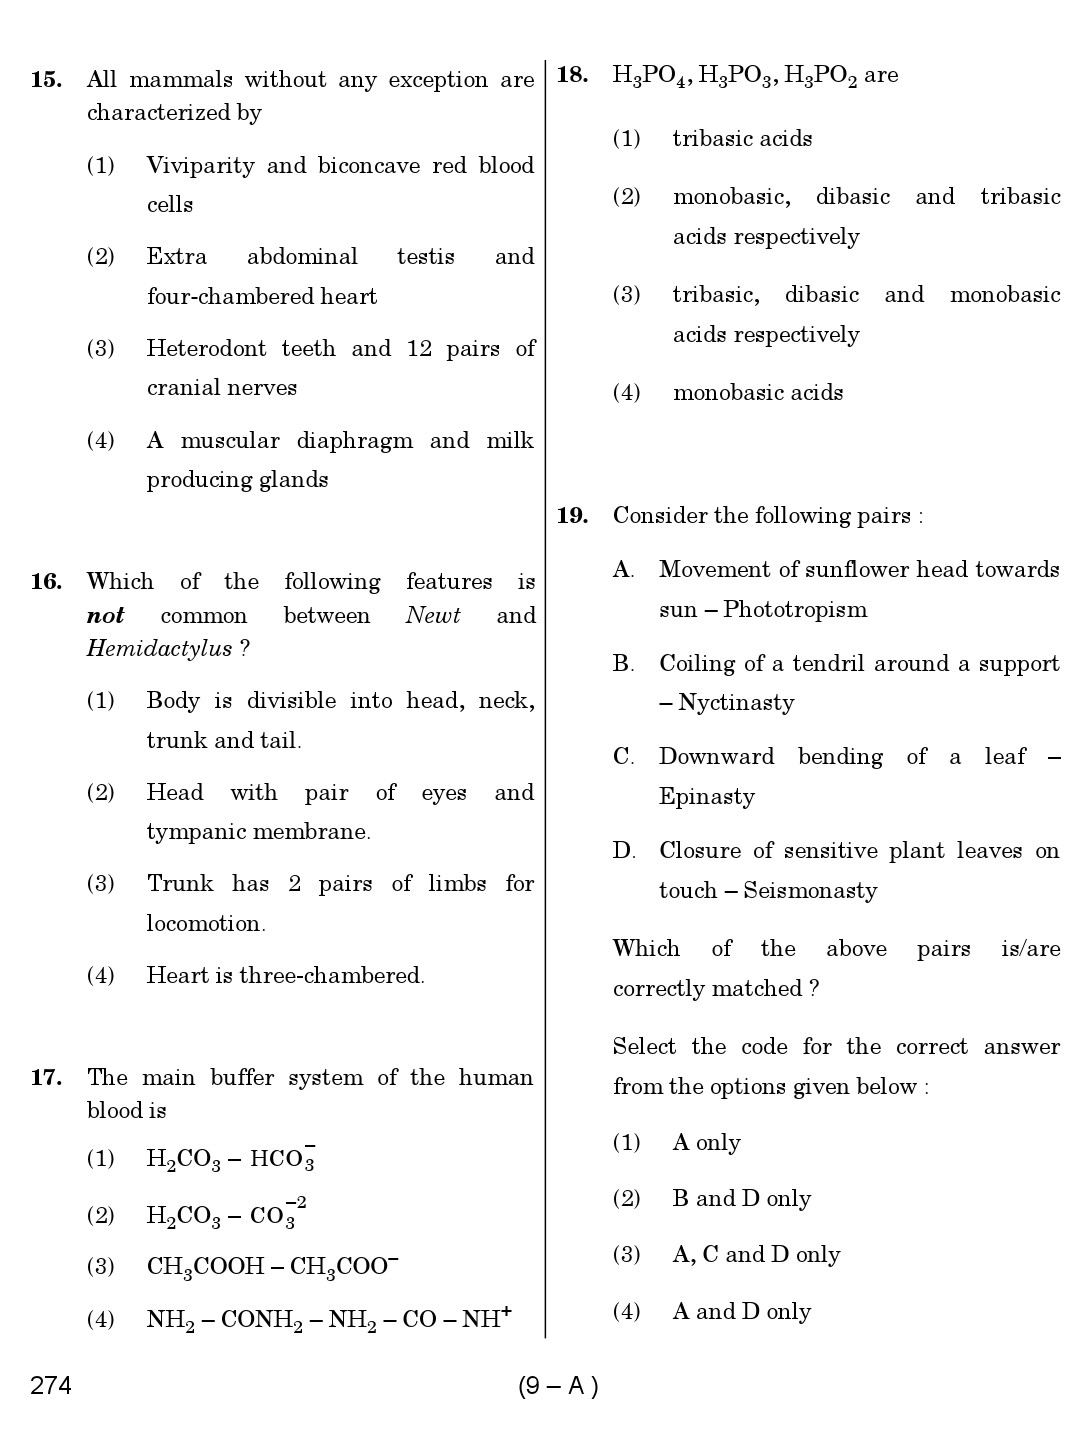 Karnataka PSC Science Teacher Exam Sample Question Paper Subject code 274 9